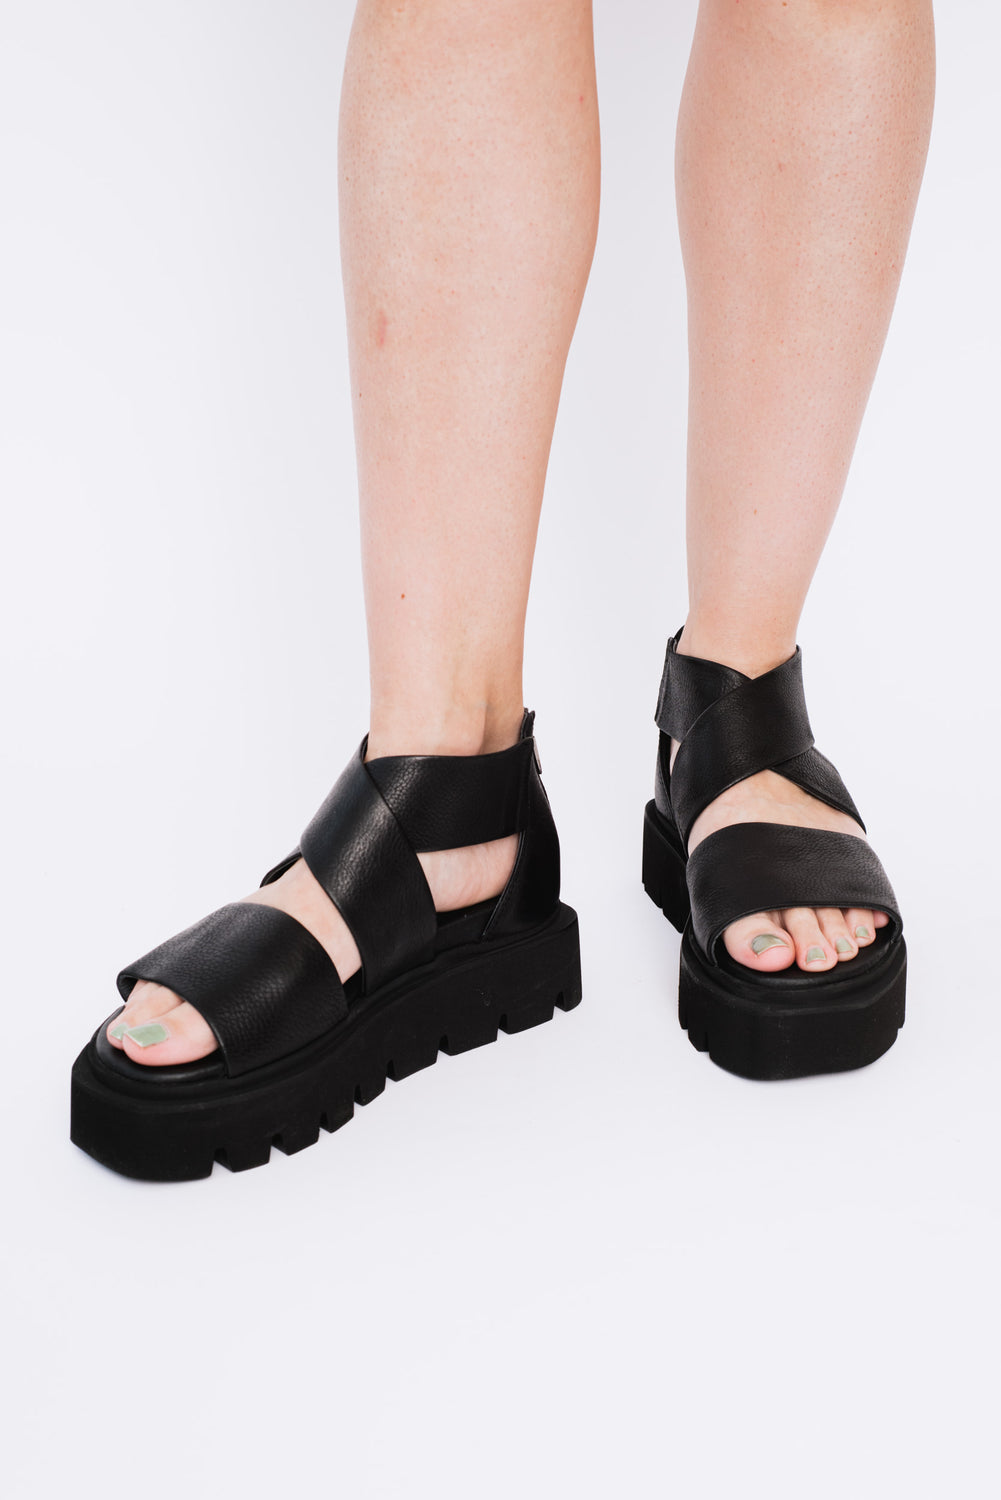 3 Colors open toe Rhinestone Strappy Platform Wedge High Heel Sandals Size  W66 | eBay